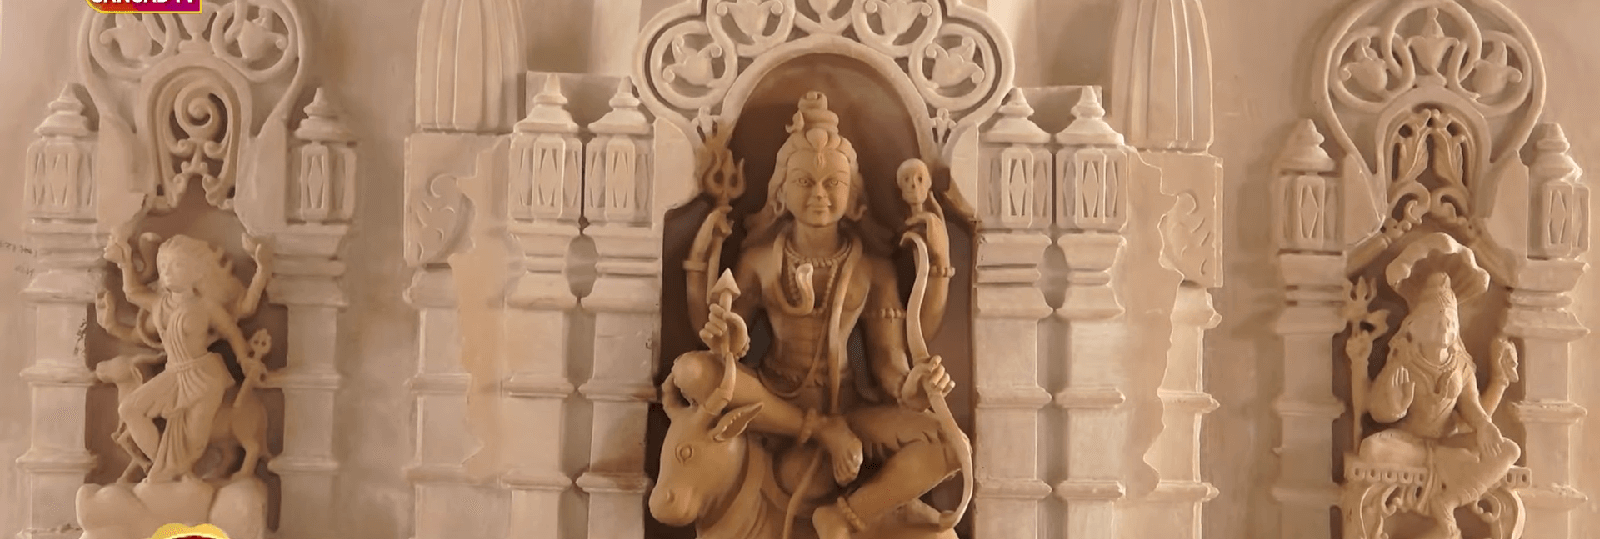 ayodhya ram mandir image